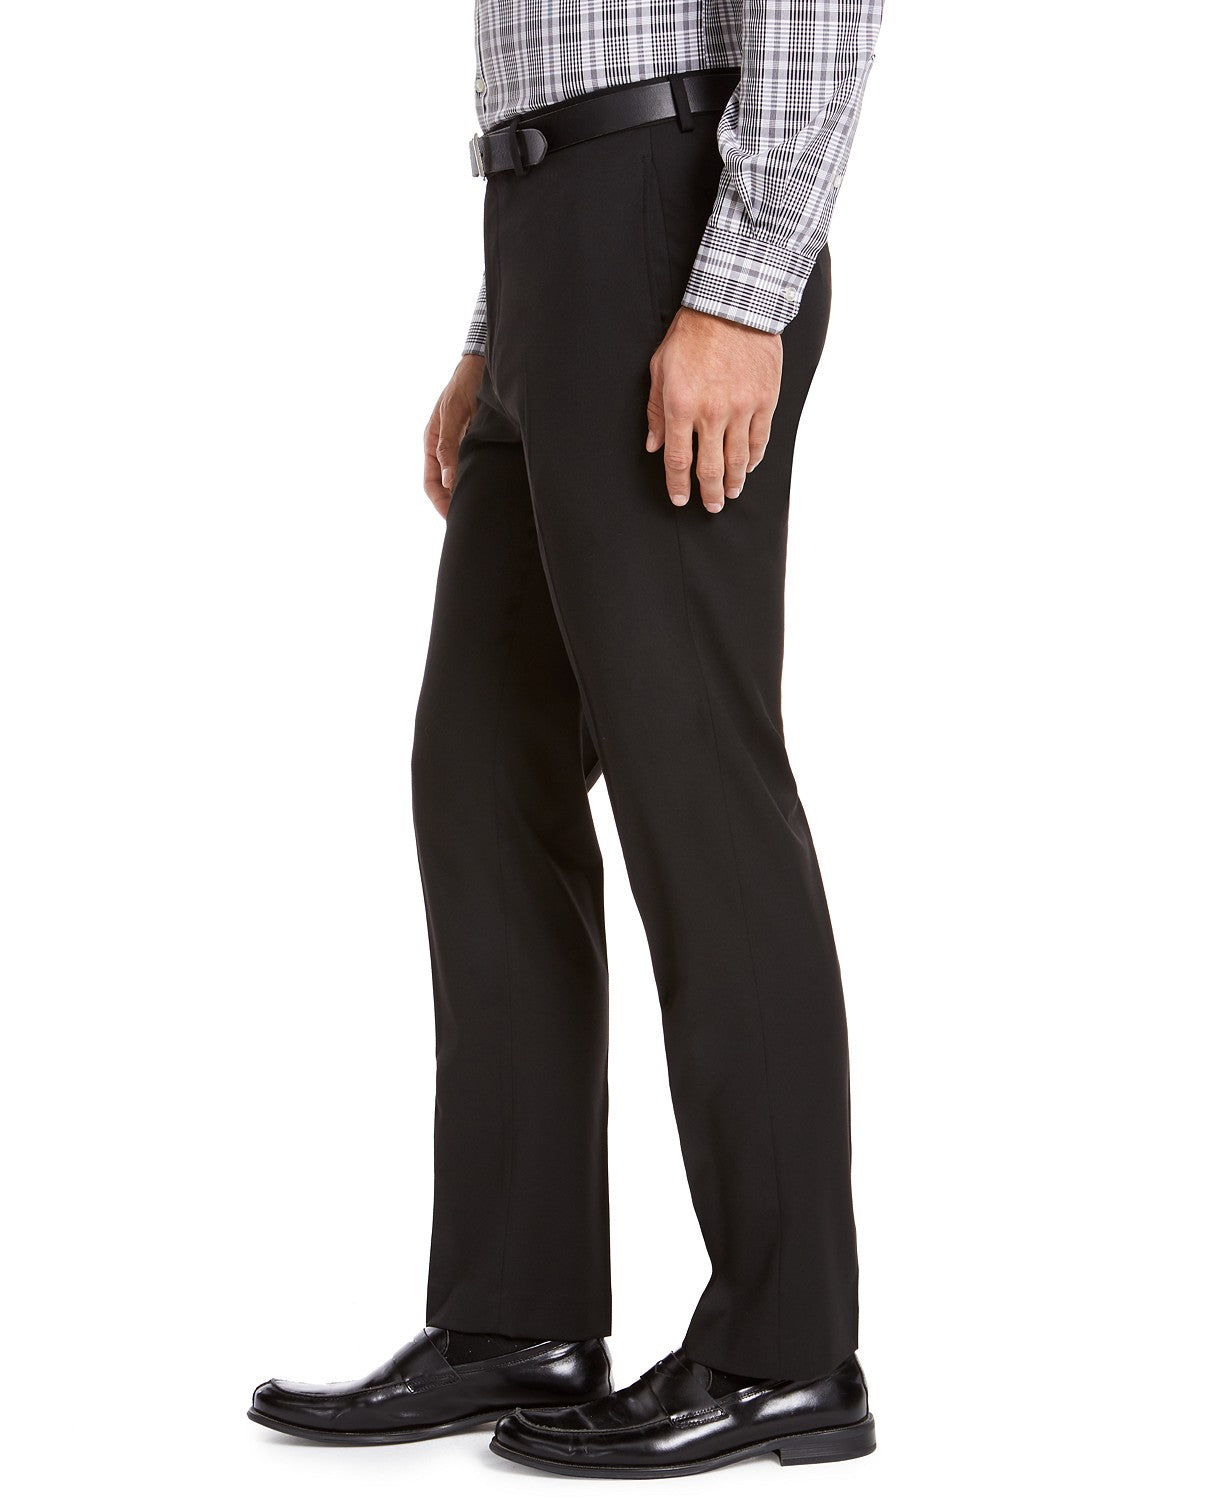 Izod Men's Classic-Fit Black Dress Pants 32 x 30 Flat Front